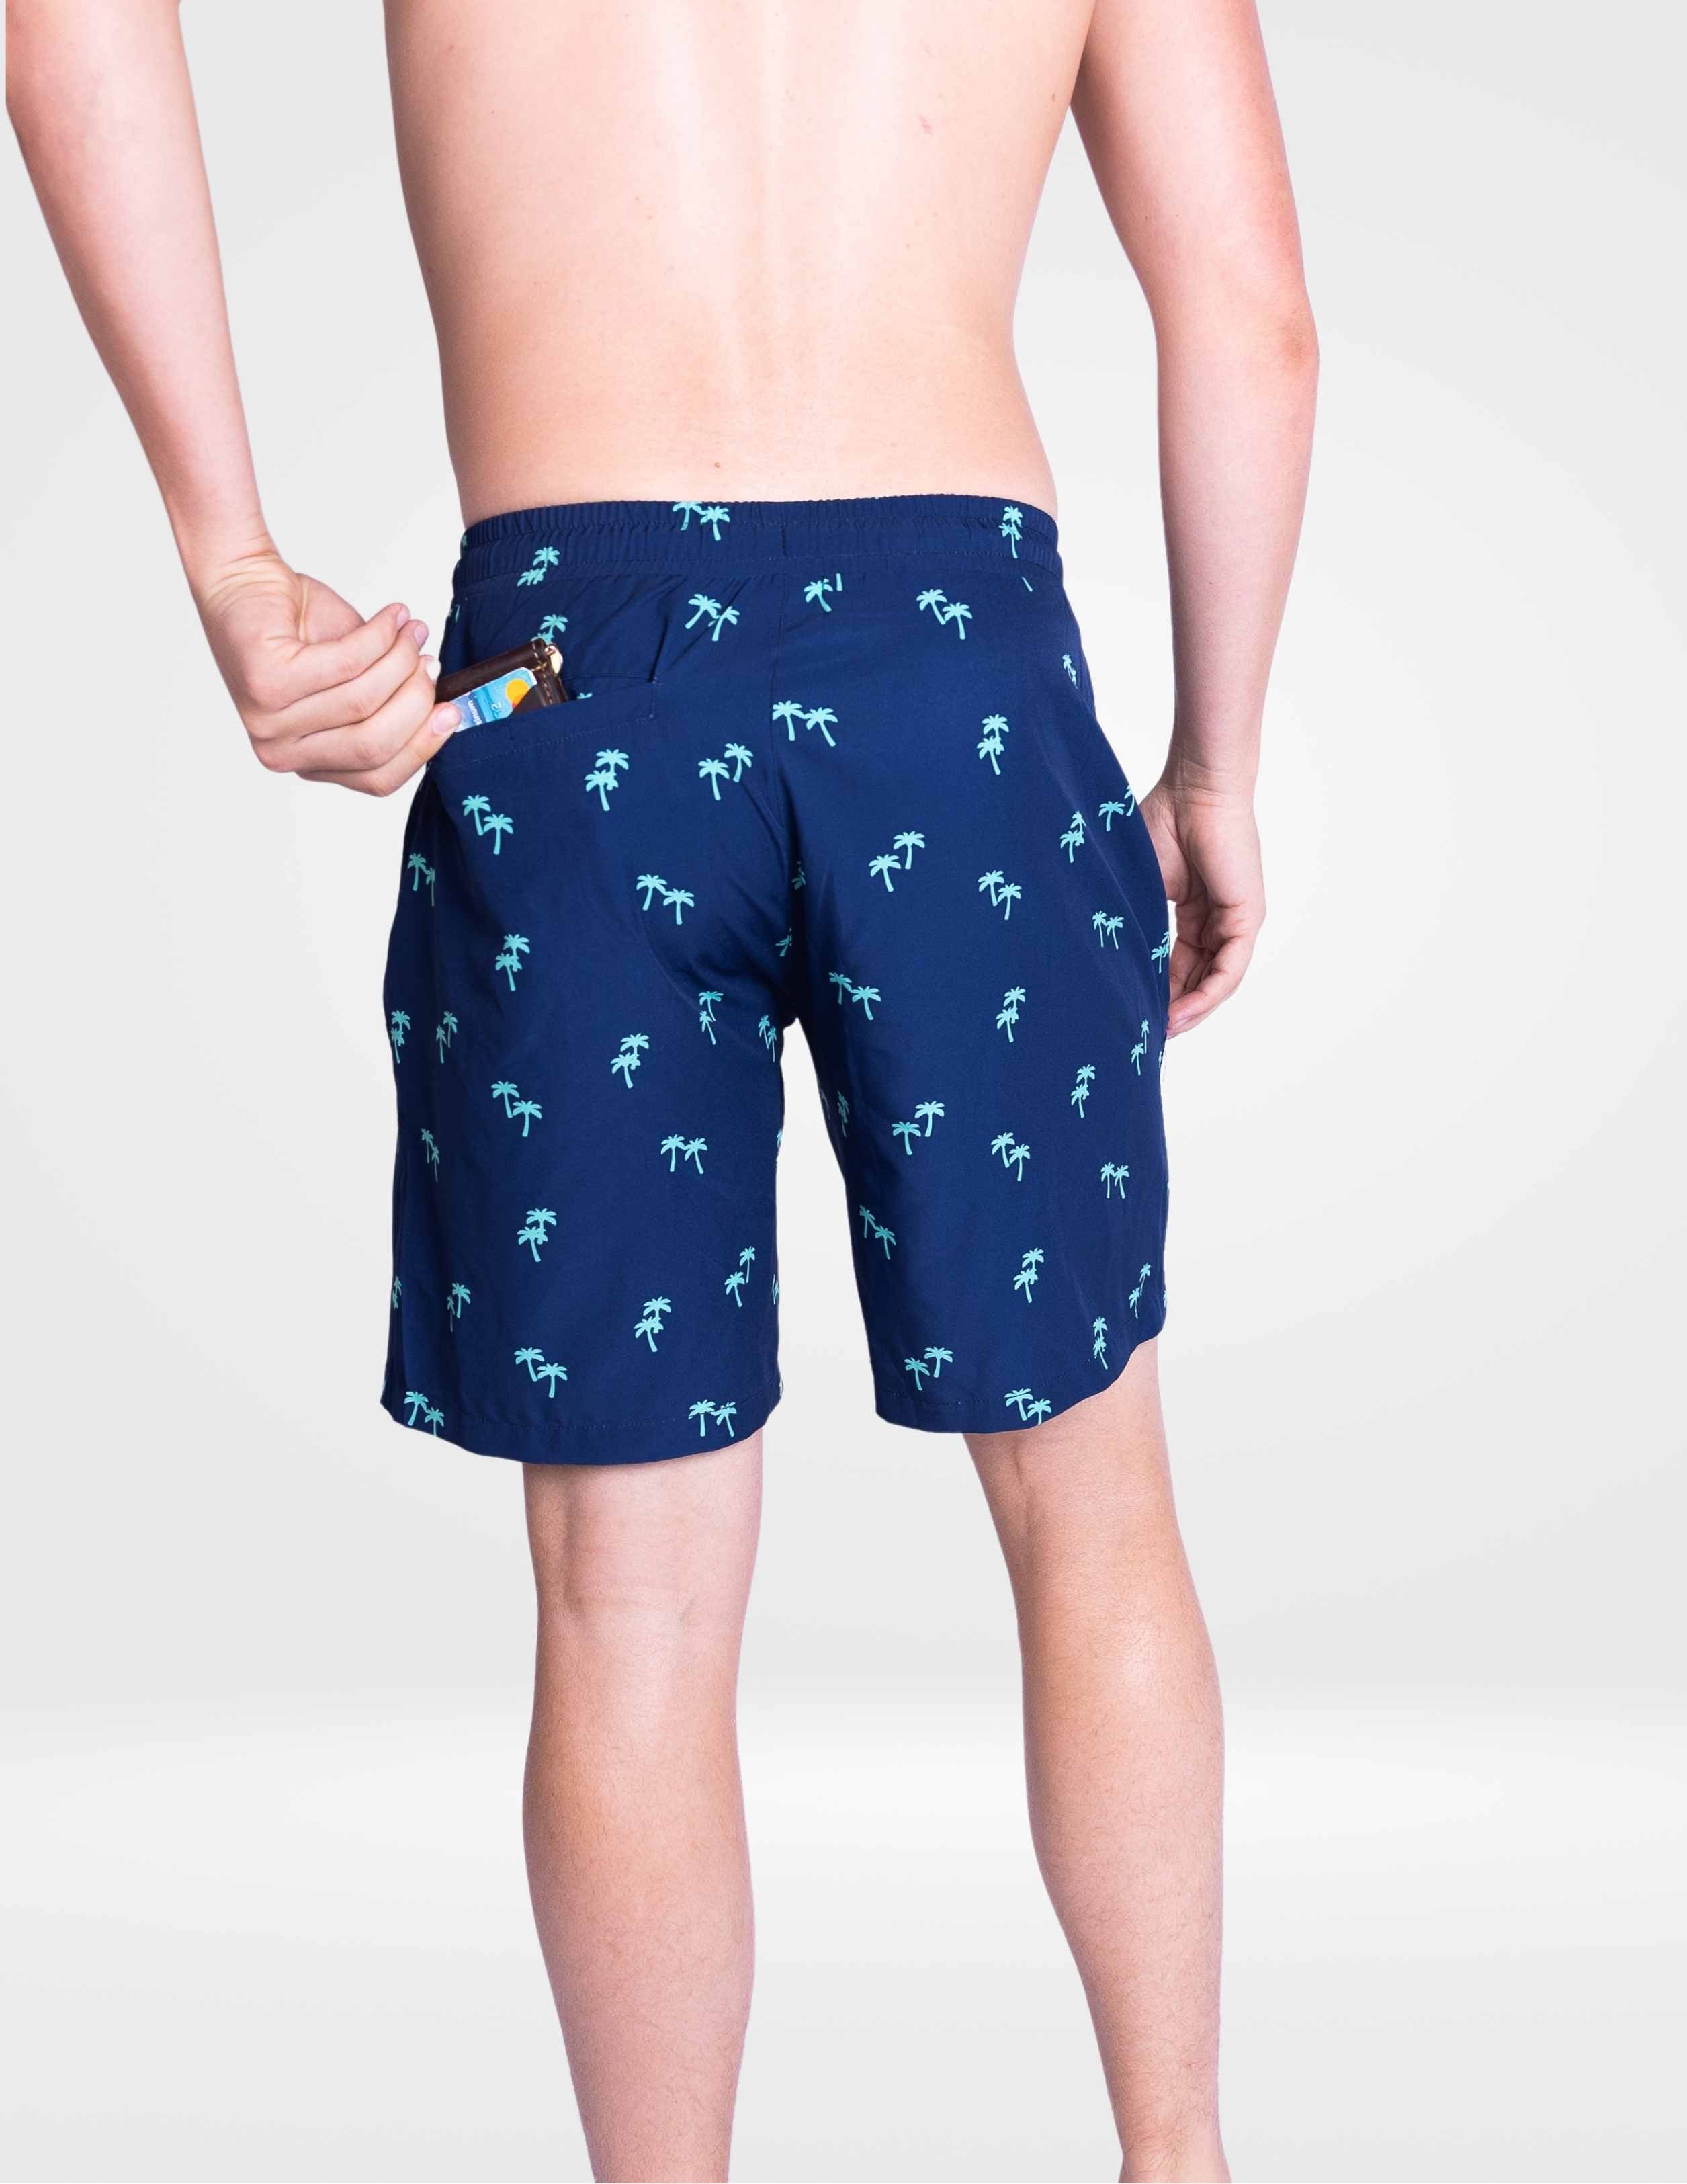 Waterproof Swim Shorts with Dry Bag Pocket Large 37- 40